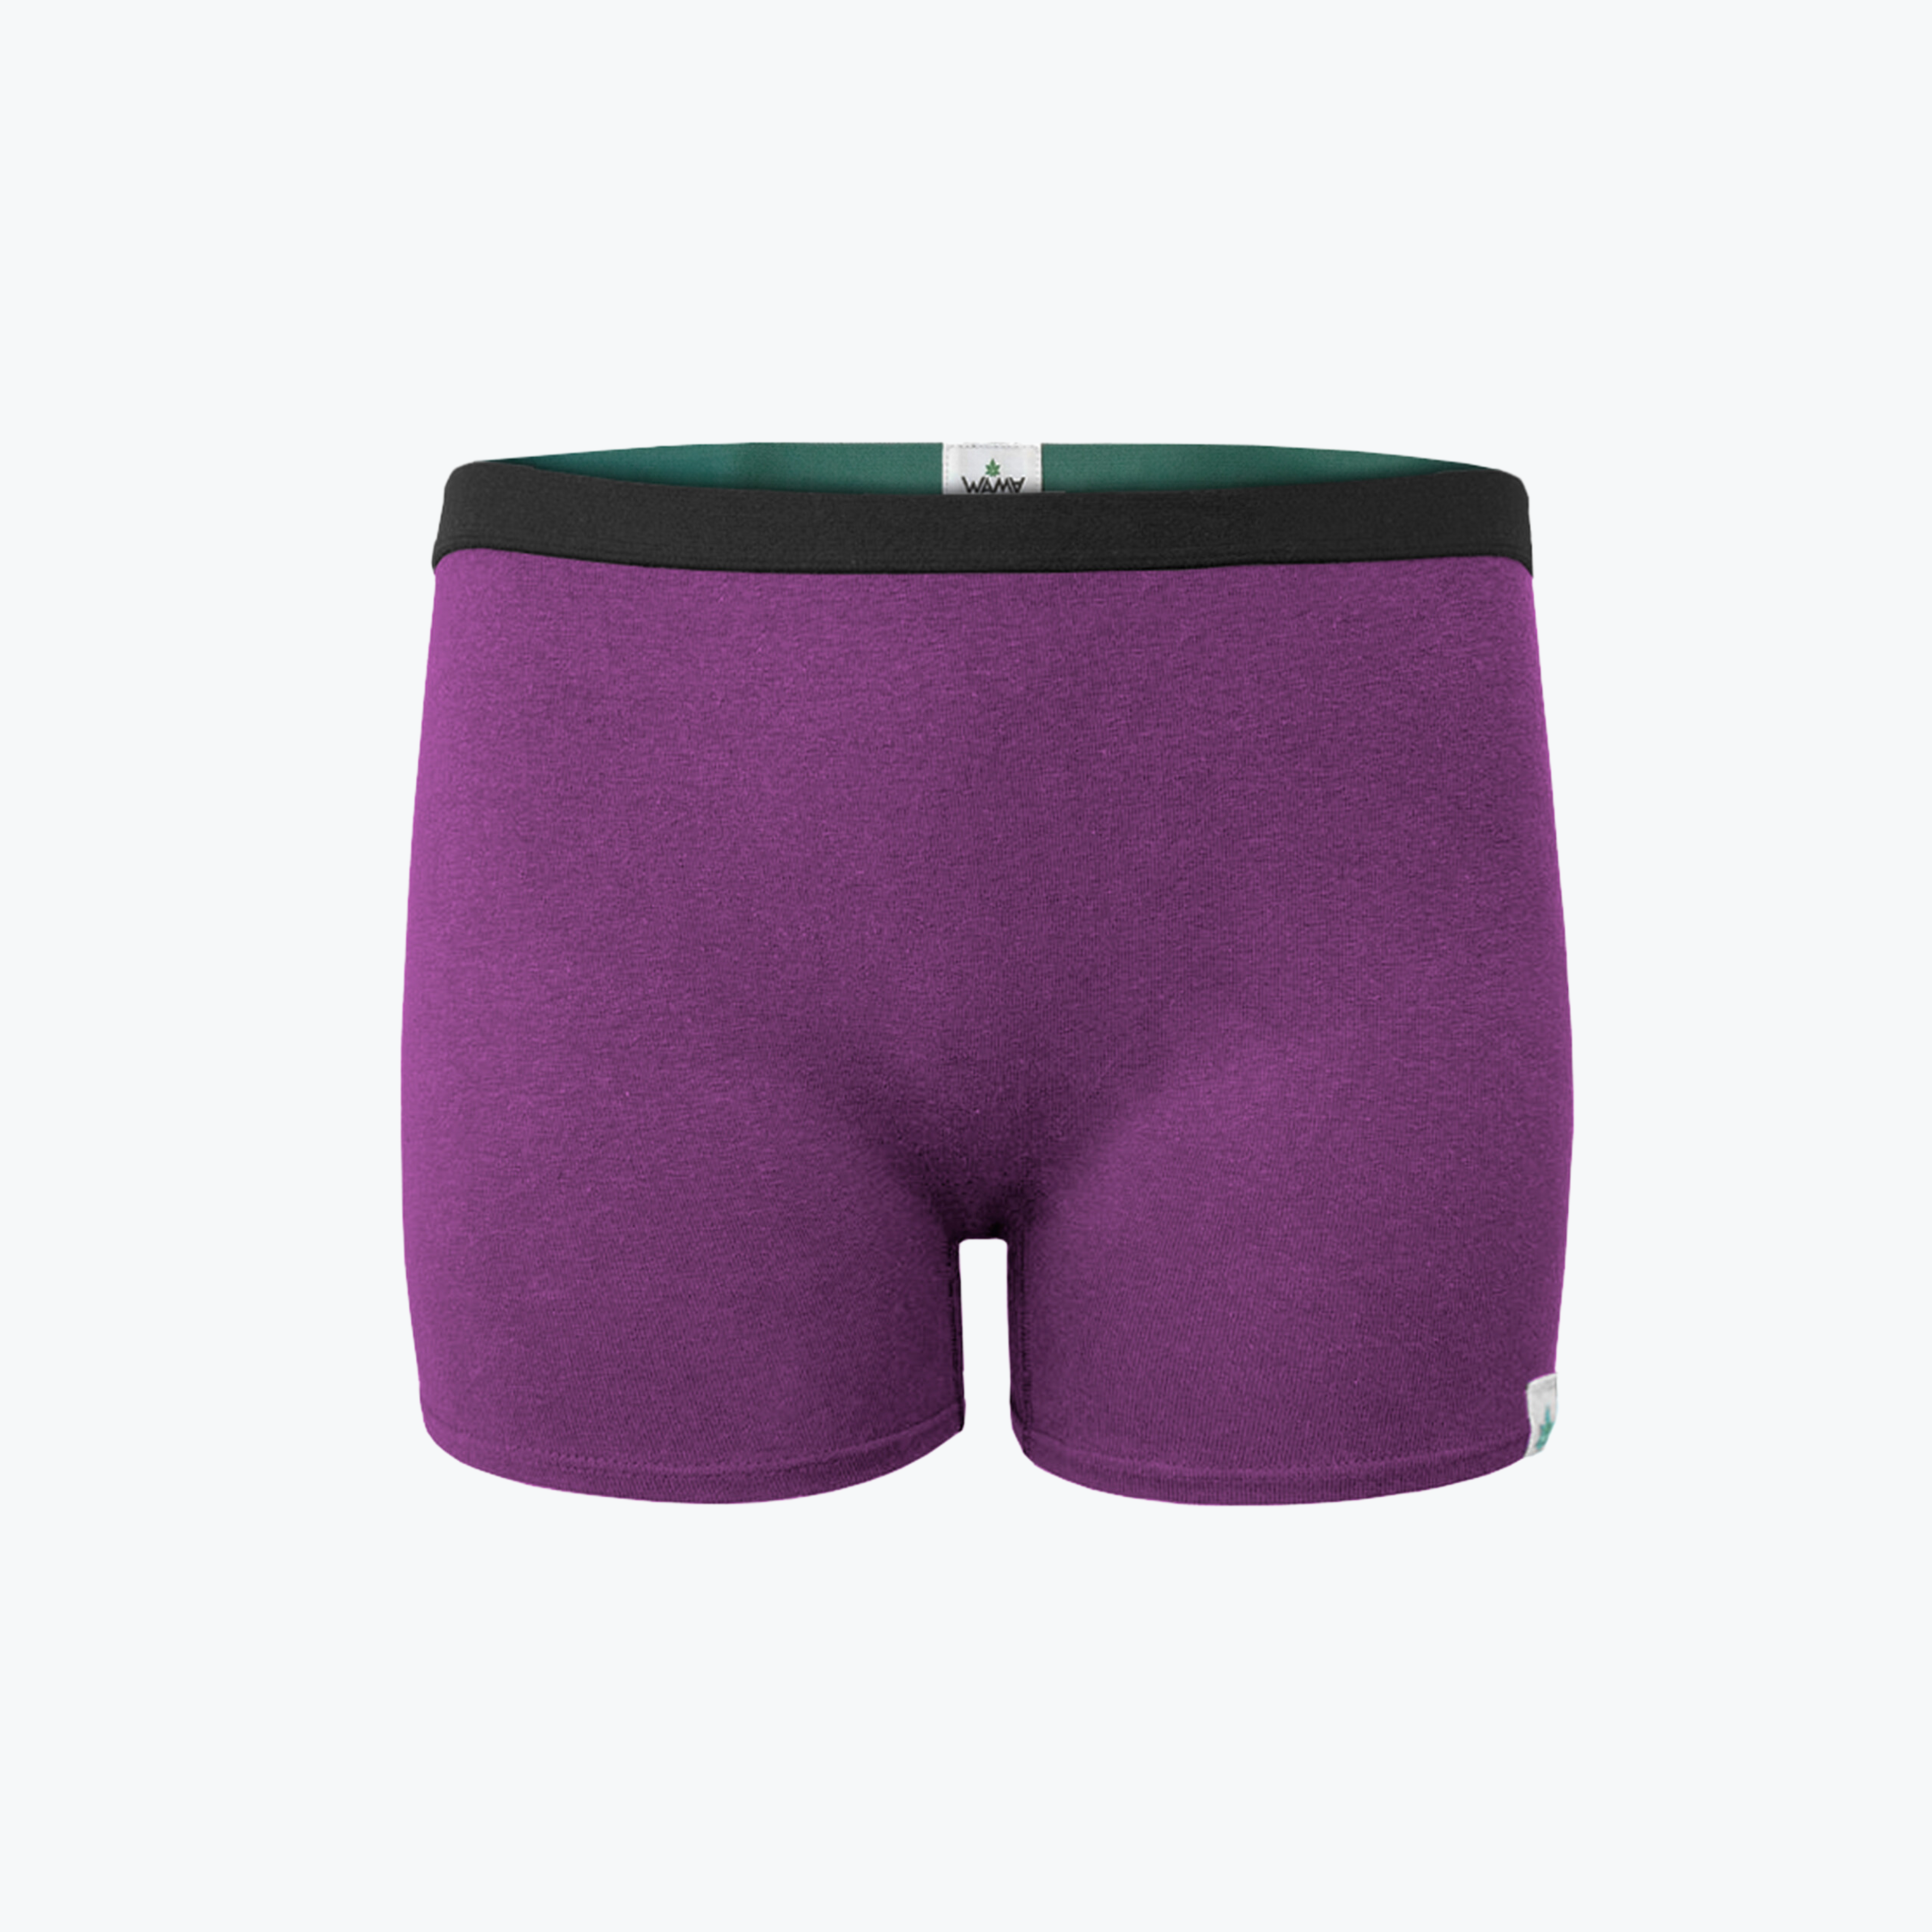 Buy WAMA - Hemp Boy Shorts Online - Hemp Store